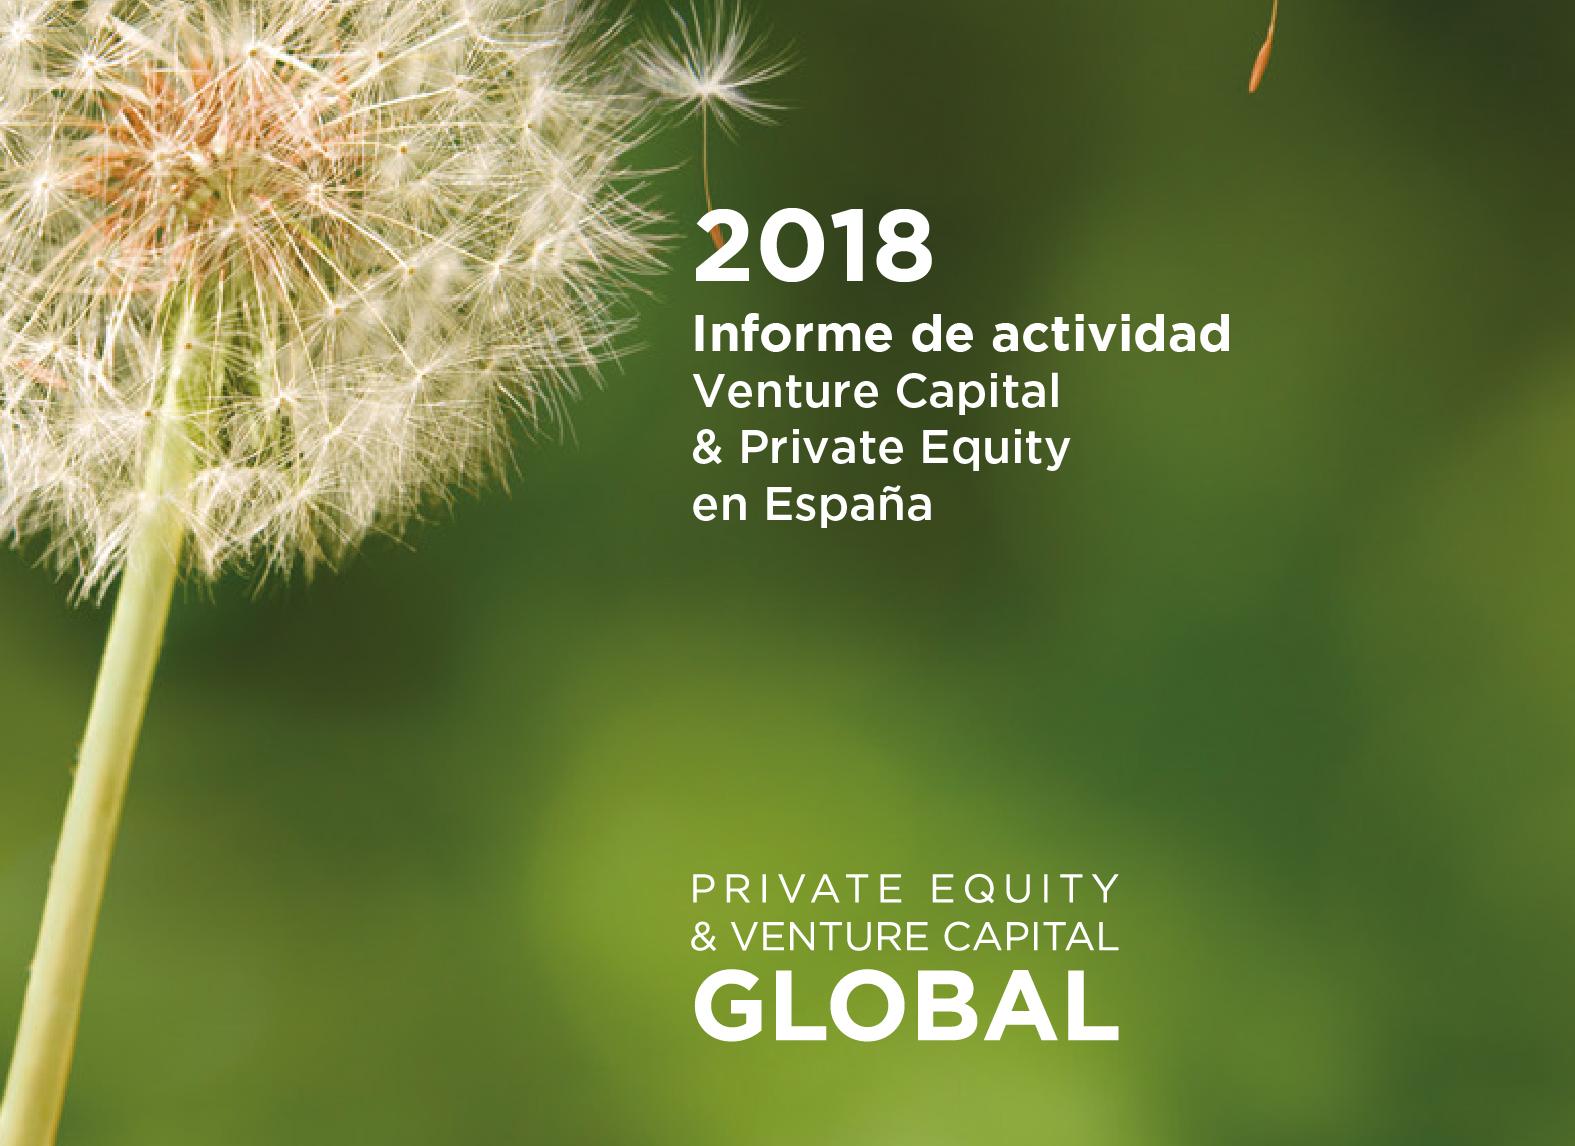 Informe 2018 “Venture Capital & Private Equity en España”